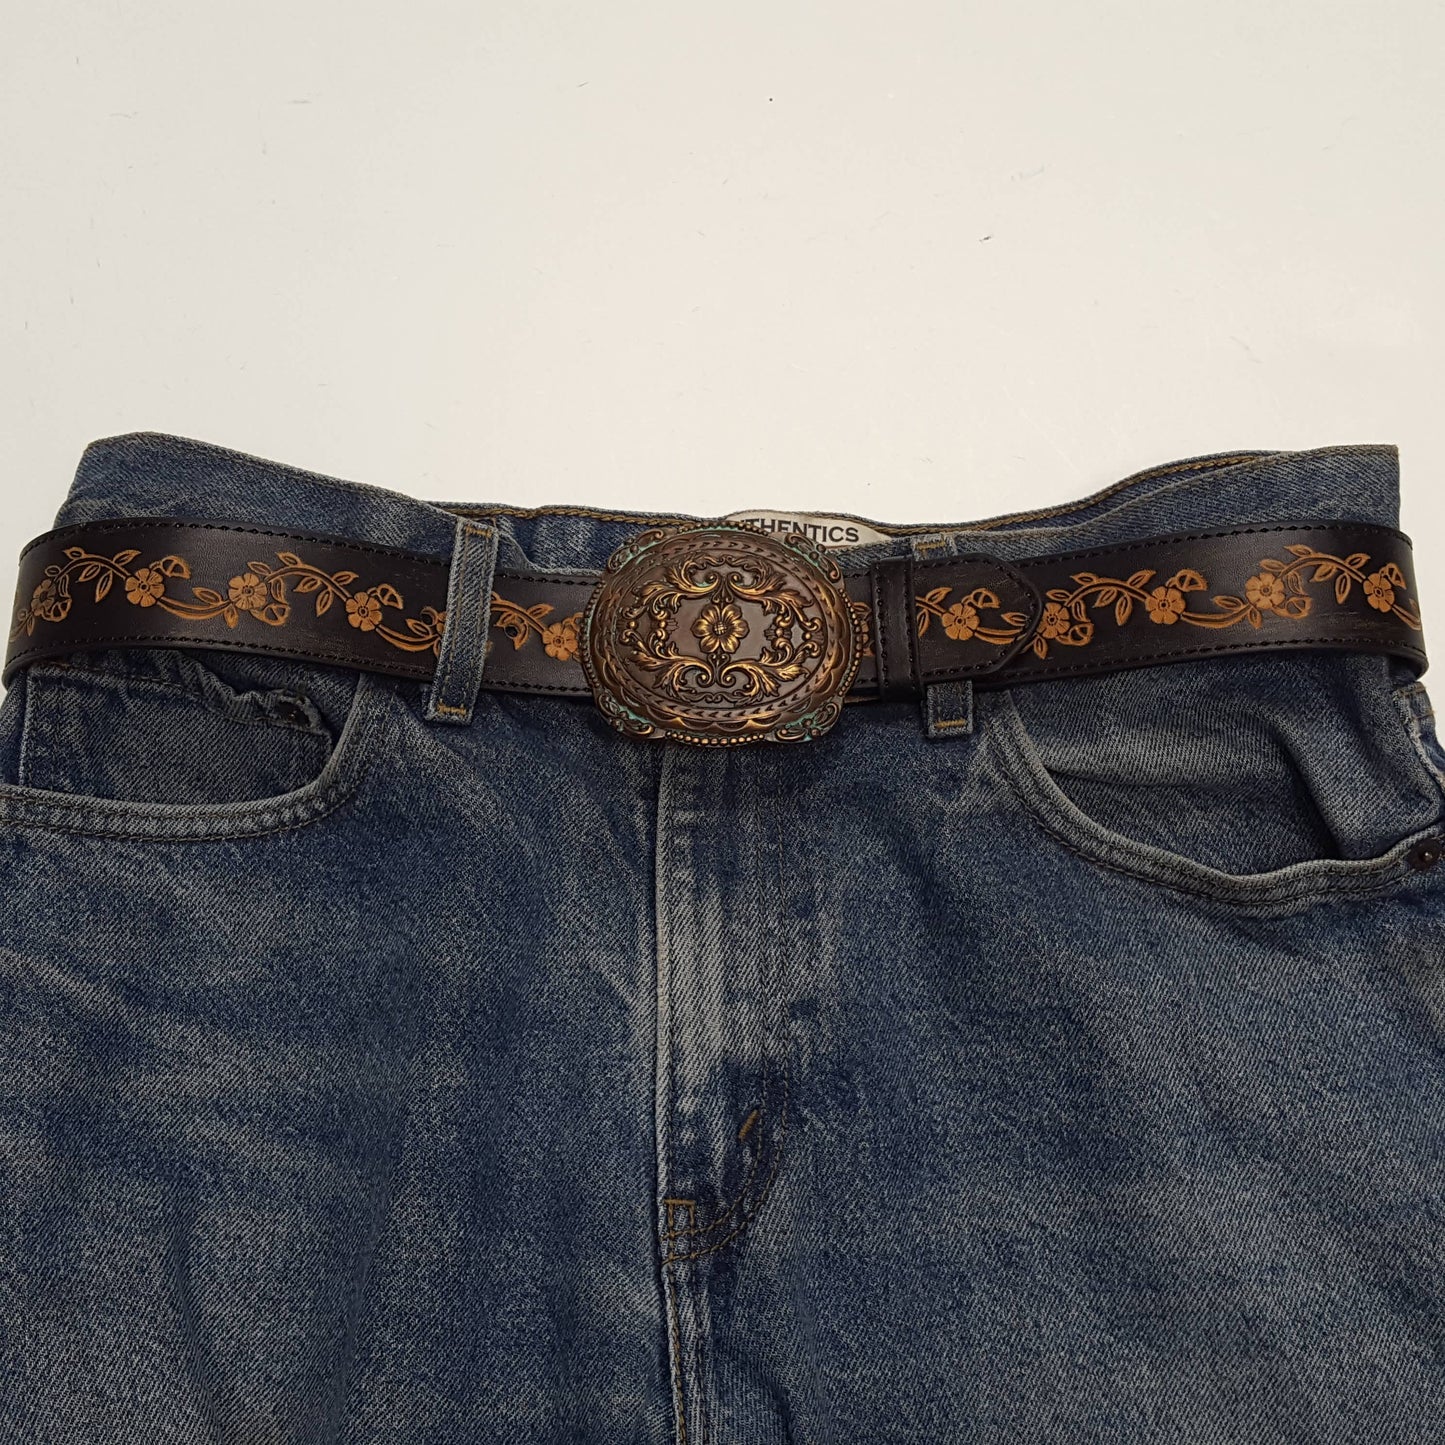 Western Brass/Patina Buckle with Vintage floral tooled belt: M / Black